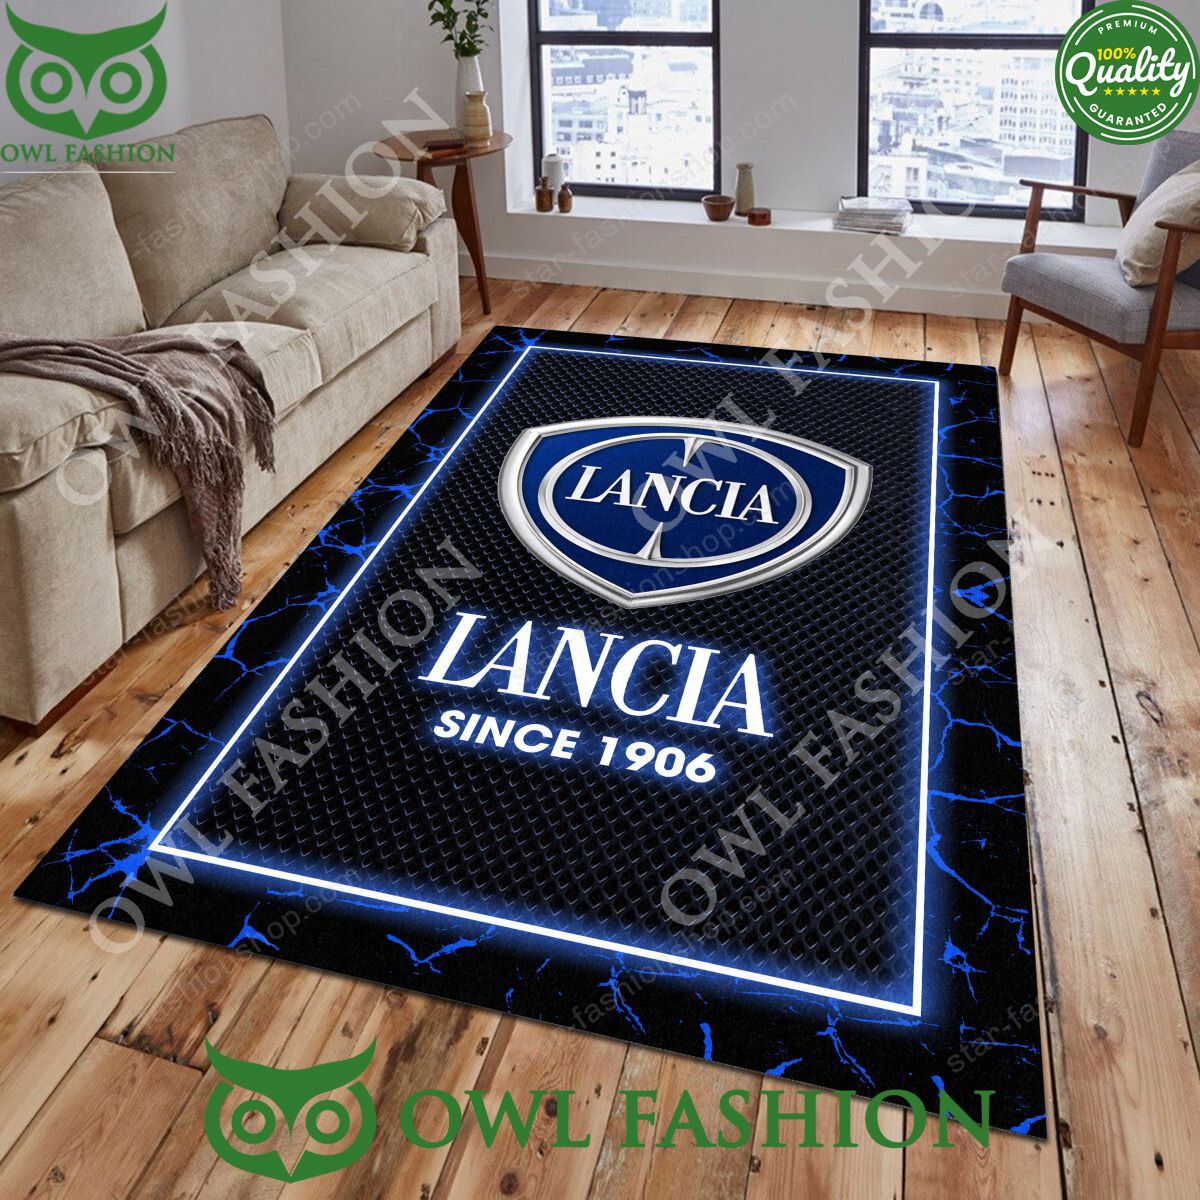 Lancia Luxury Car Brand Limited Lighting Rug Carpet